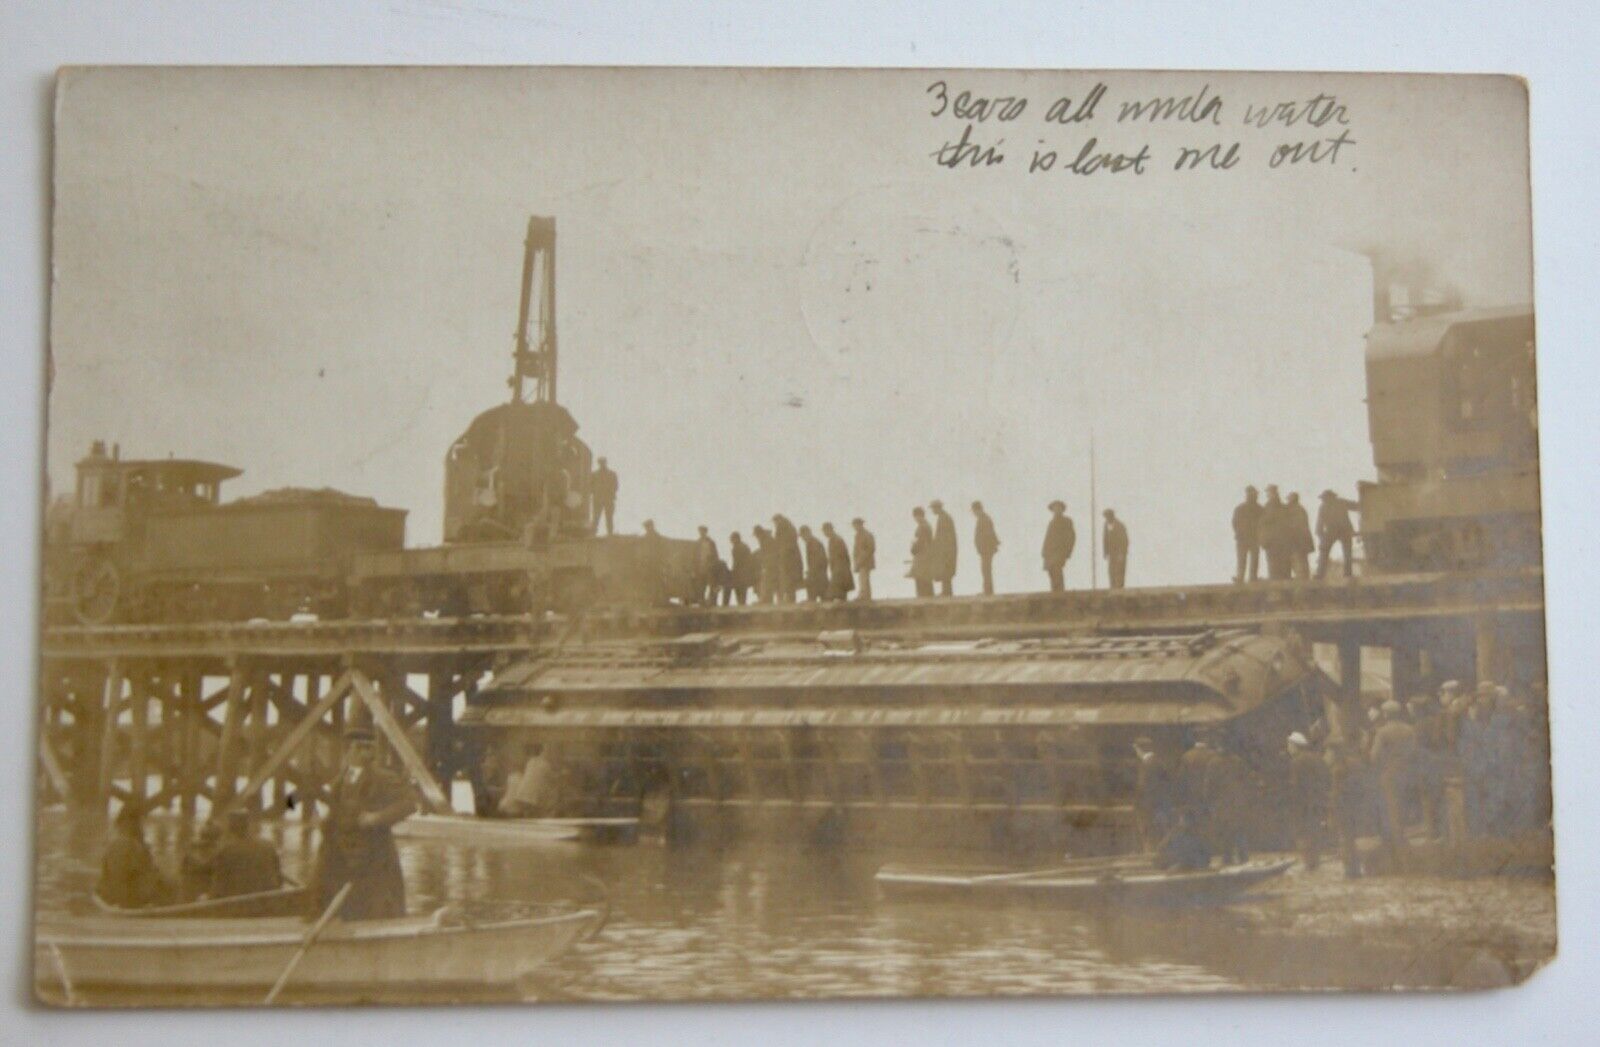 1906 Real Photo Train Wreck Atlantic City NJ LAST TRAIN CAR OUT OF WATER